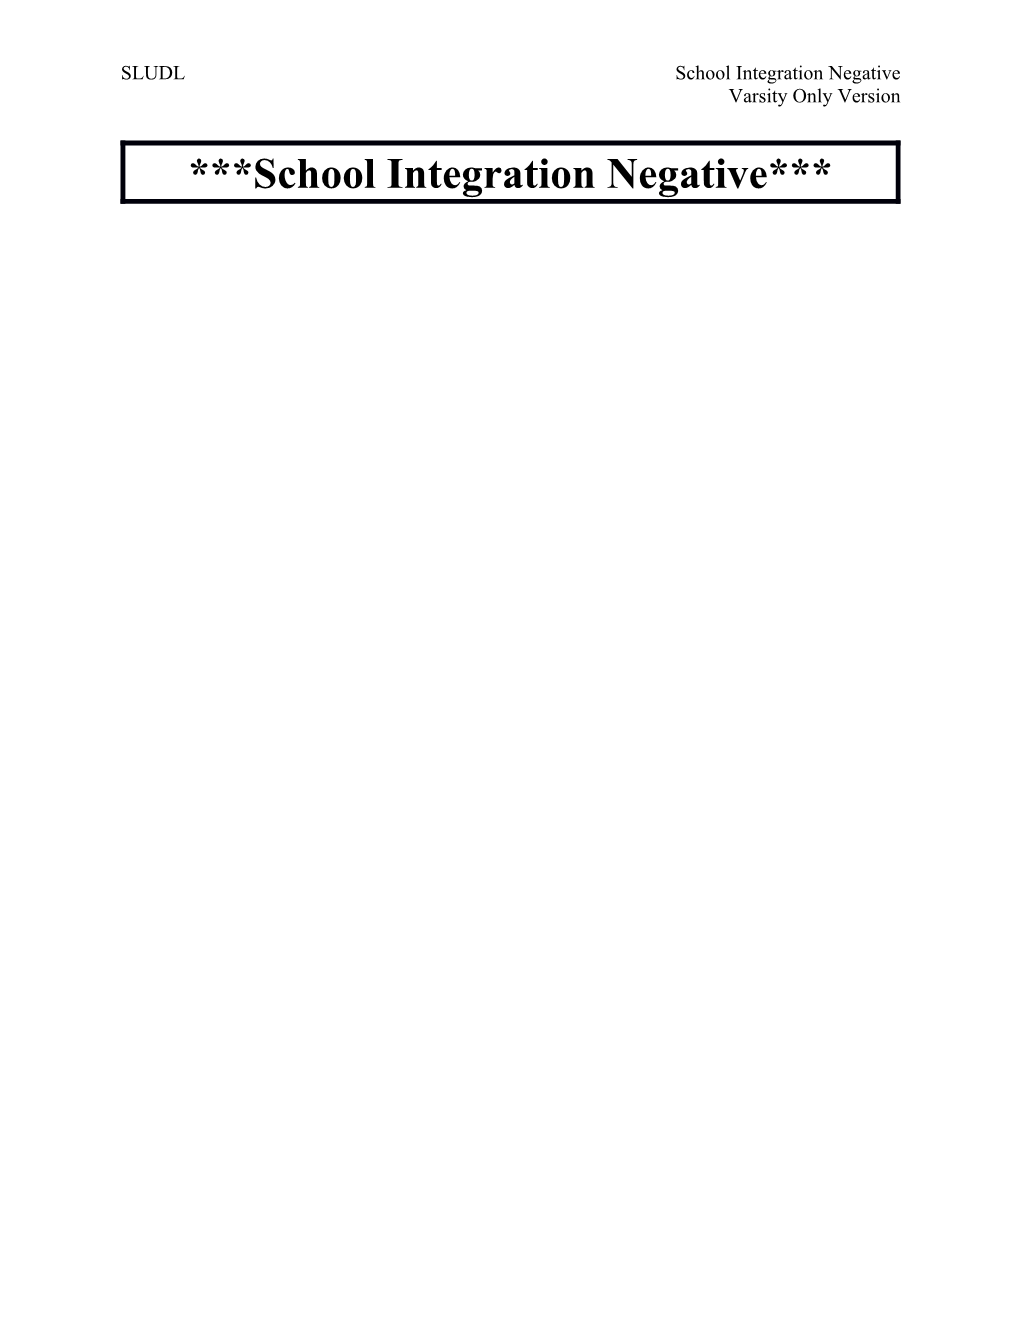 Sludlschool Integration Negative